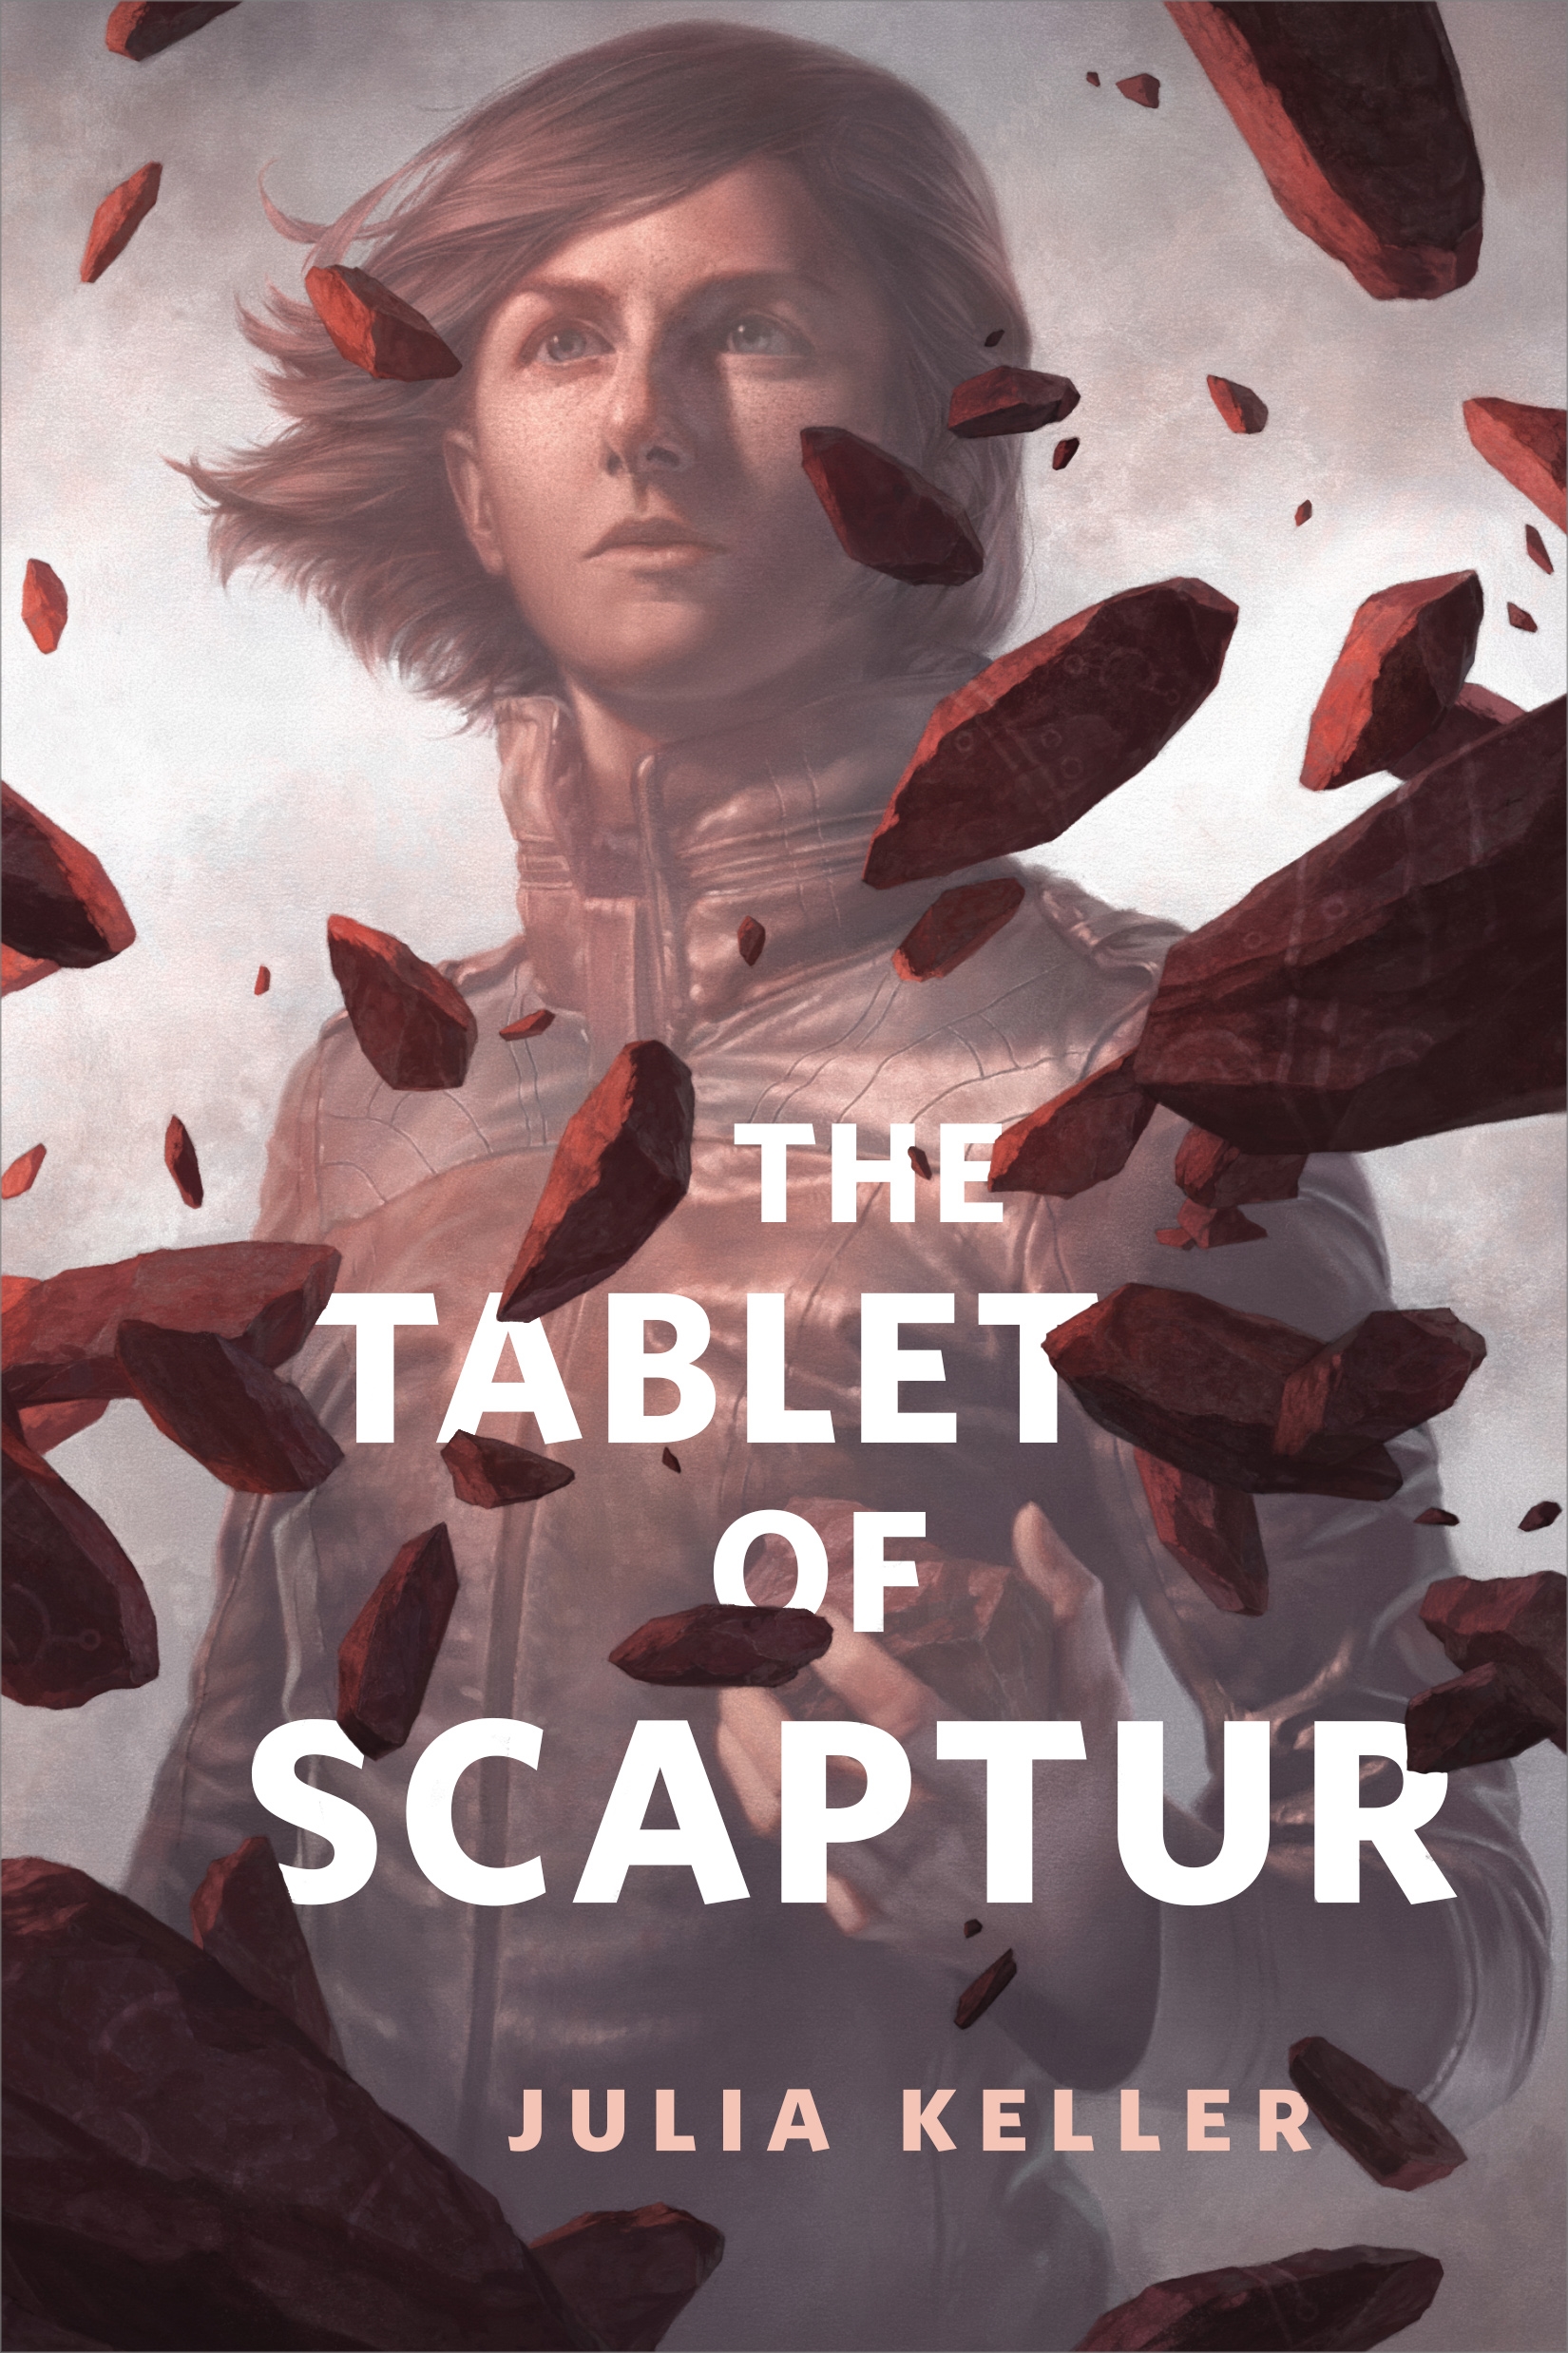 The Tablet of Scaptur : A Tor.com Original from the world of The Dark Intercept by Julia Keller